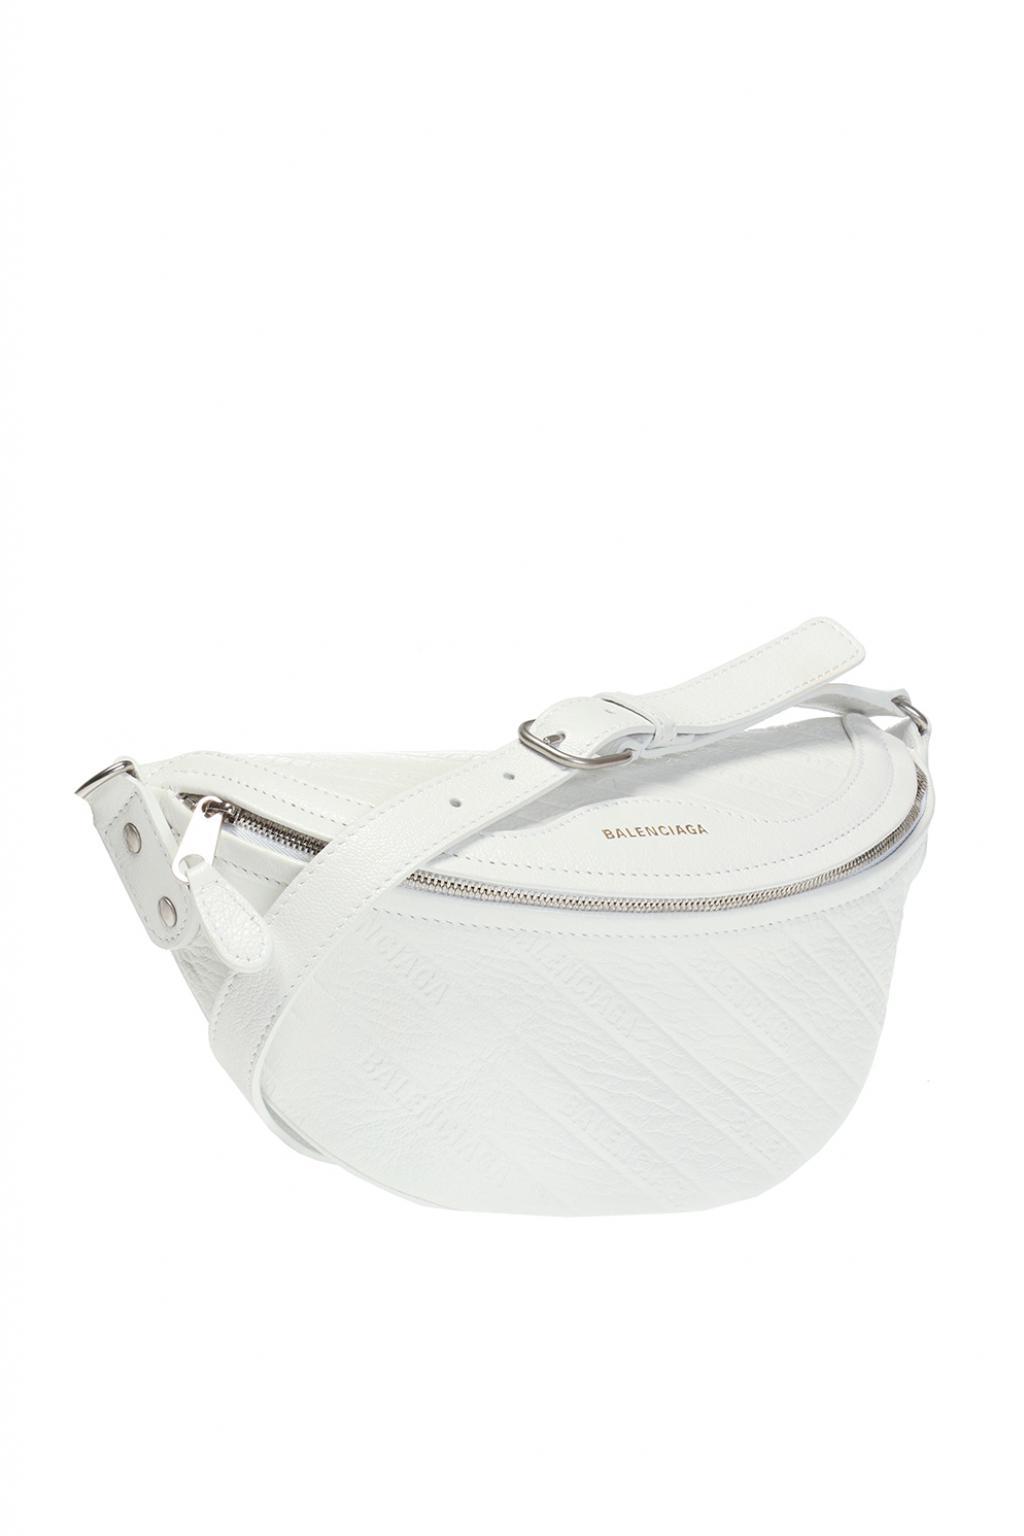 Balenciaga Leather 'souvenirs' Belt Bag White | Lyst